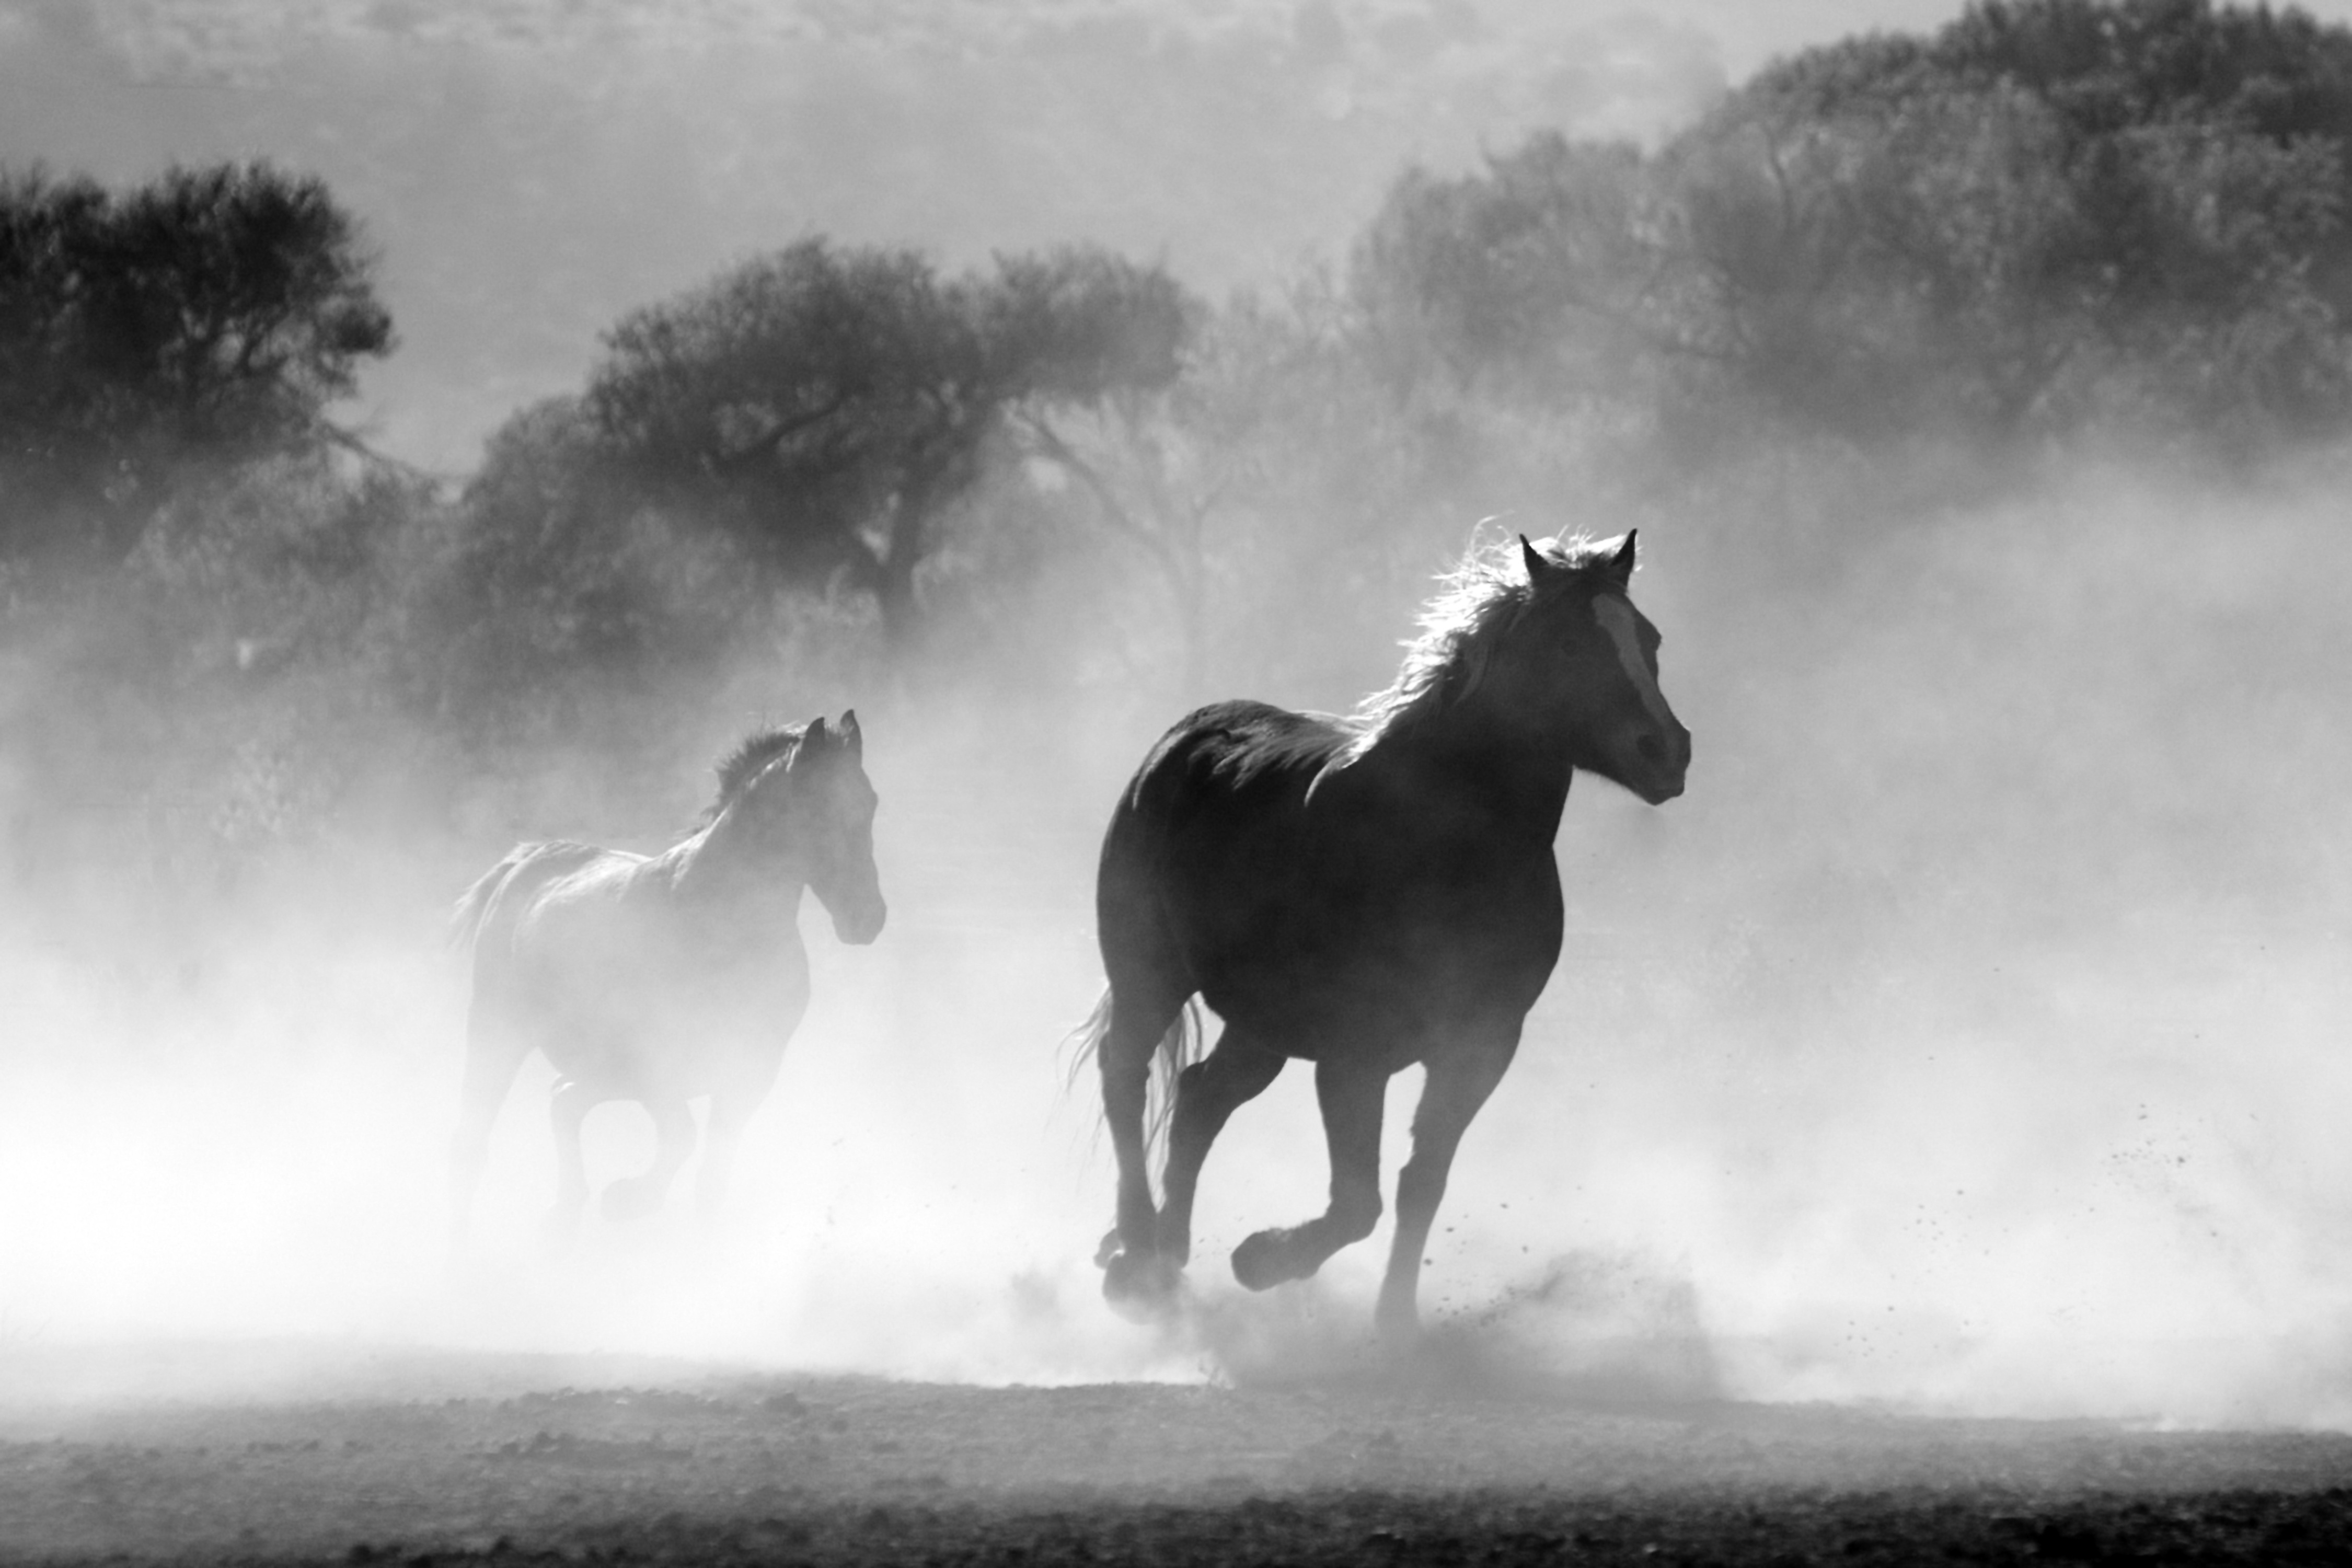 horse-herd-fog-nature-52500